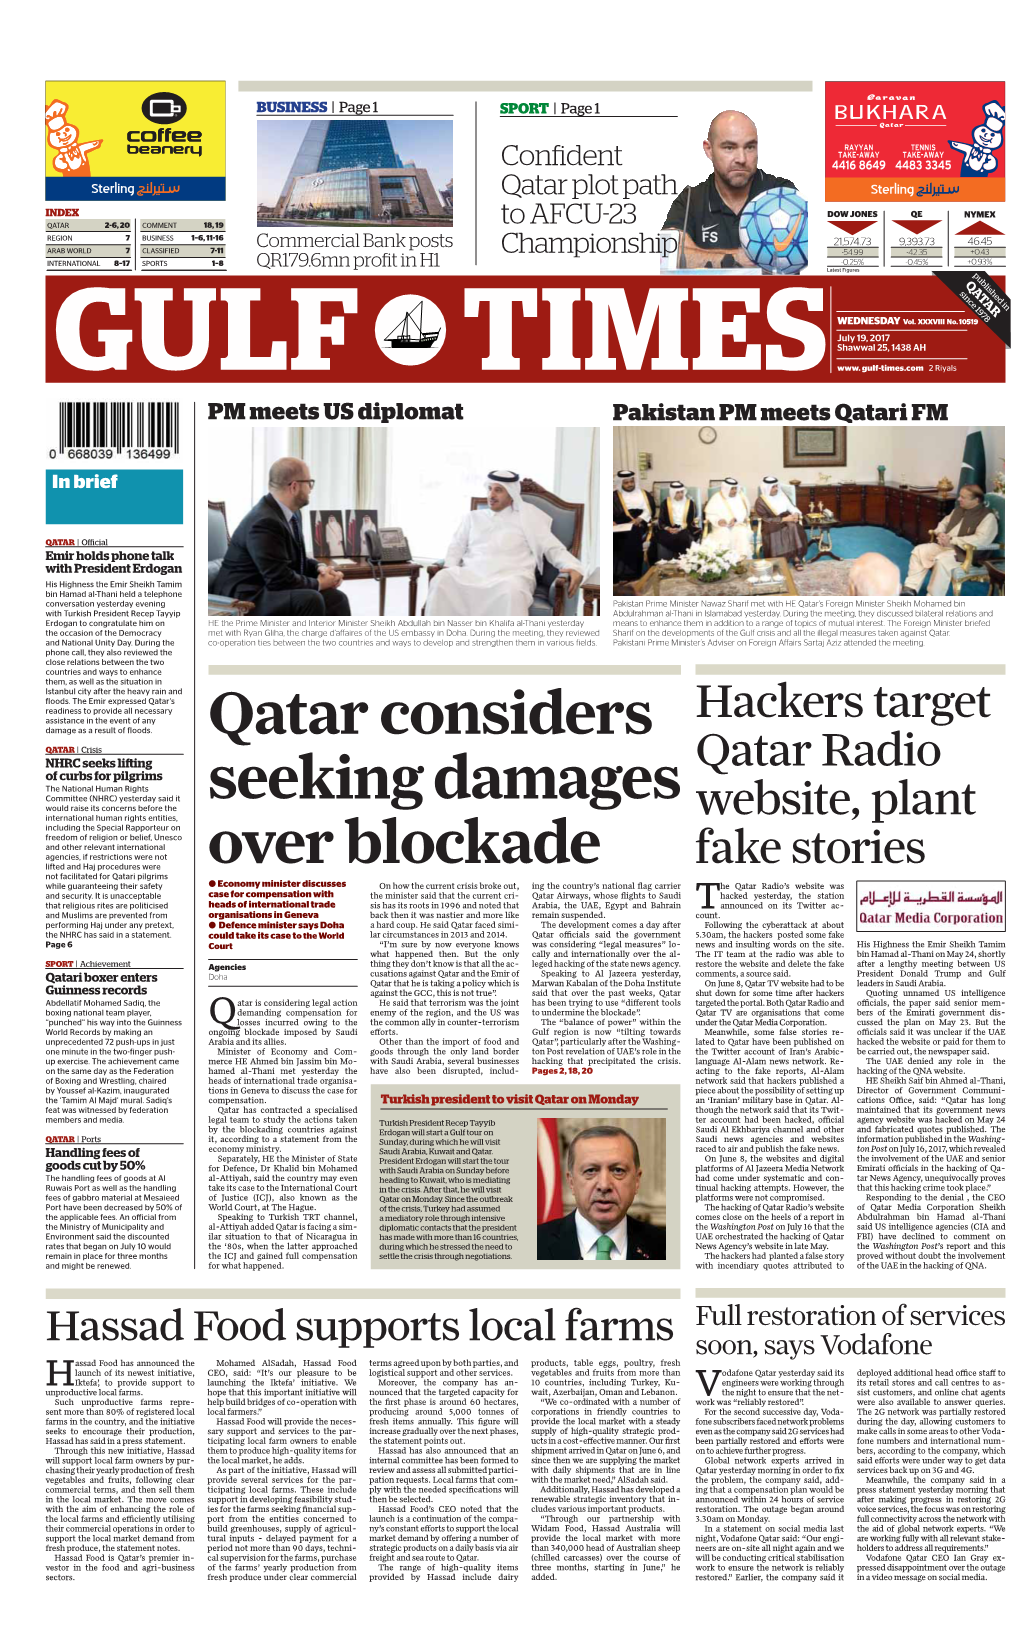 Qatar Considers Seeking Damages Over Blockade